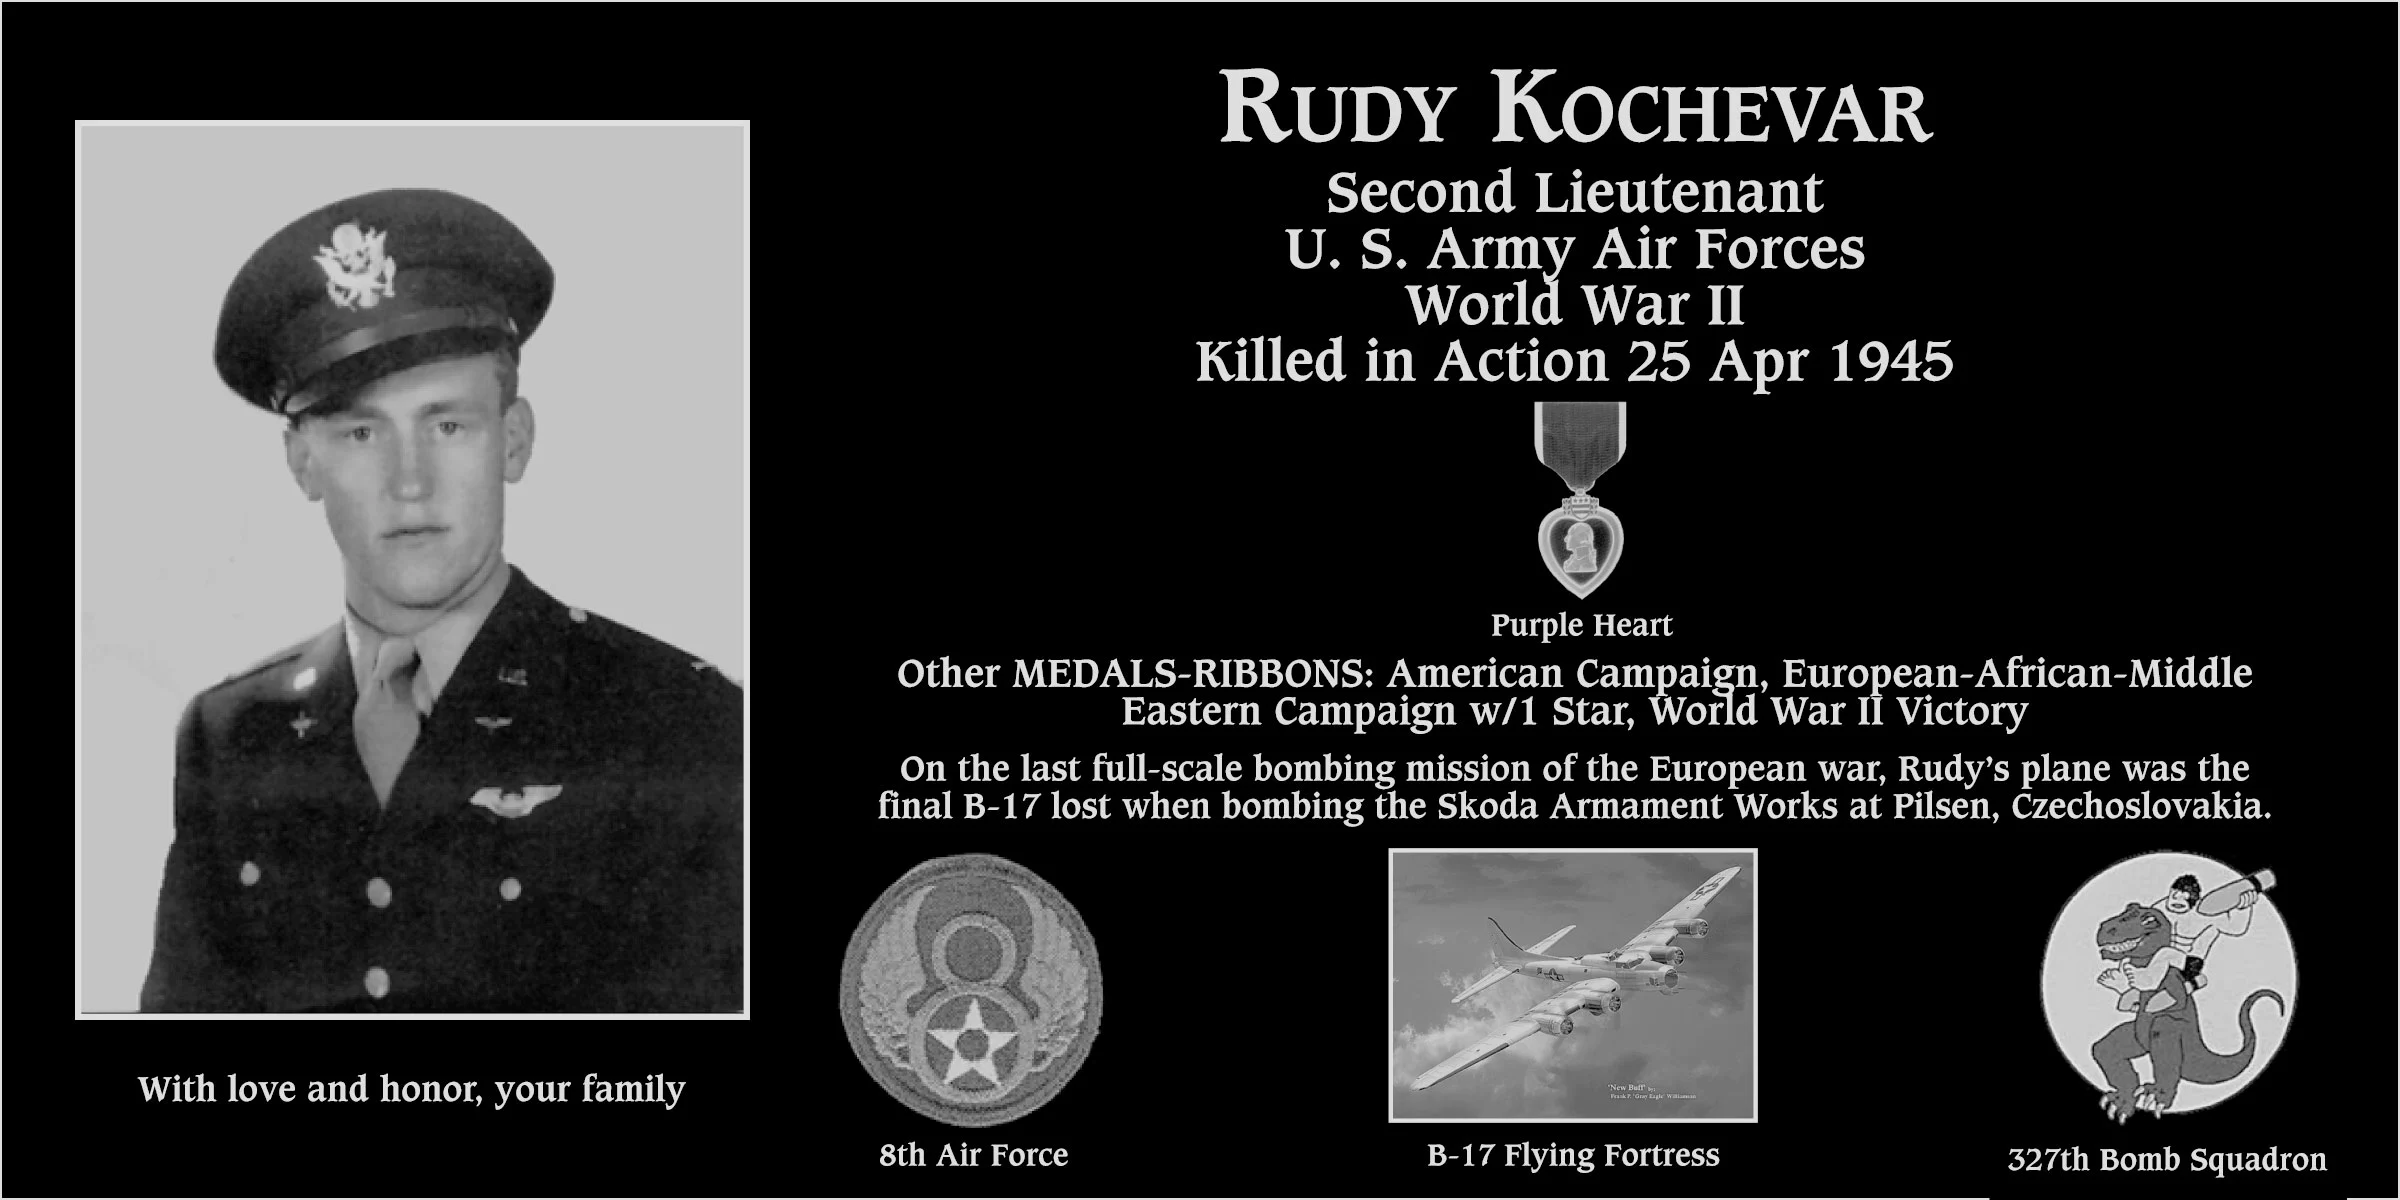 Rudy Kochevar